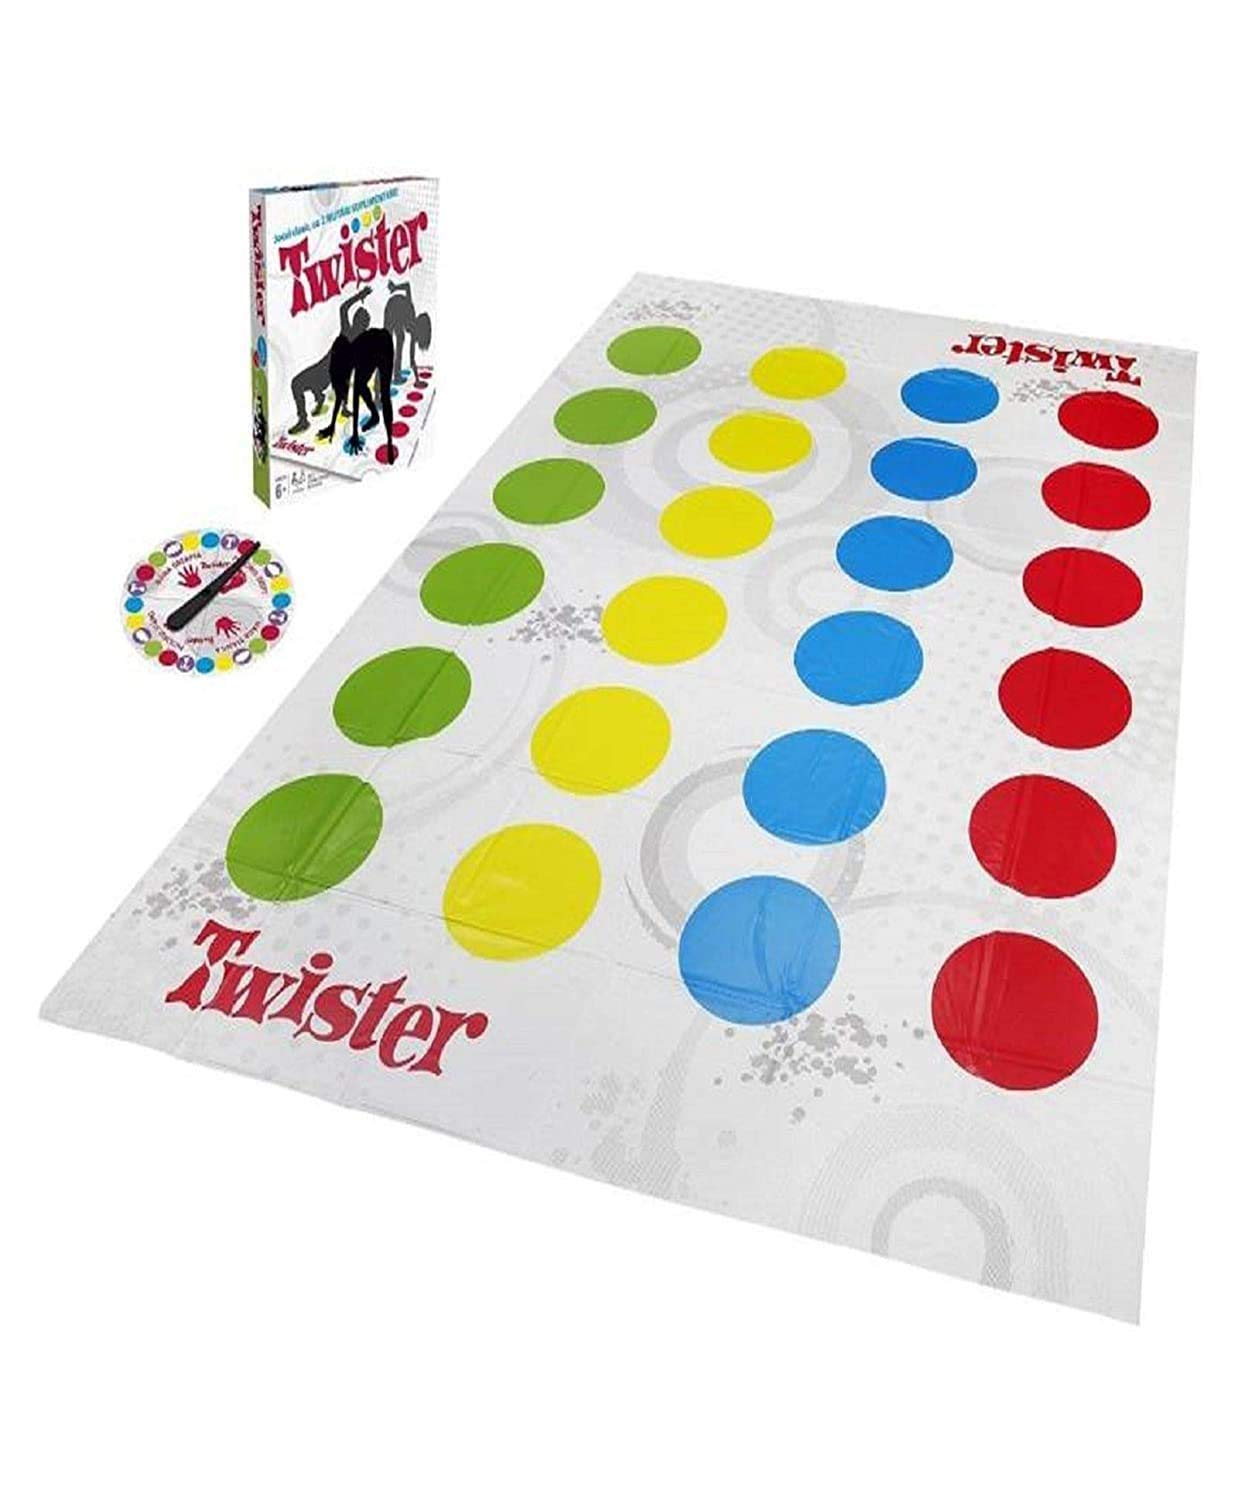 Floor Game with Finger Twister Set